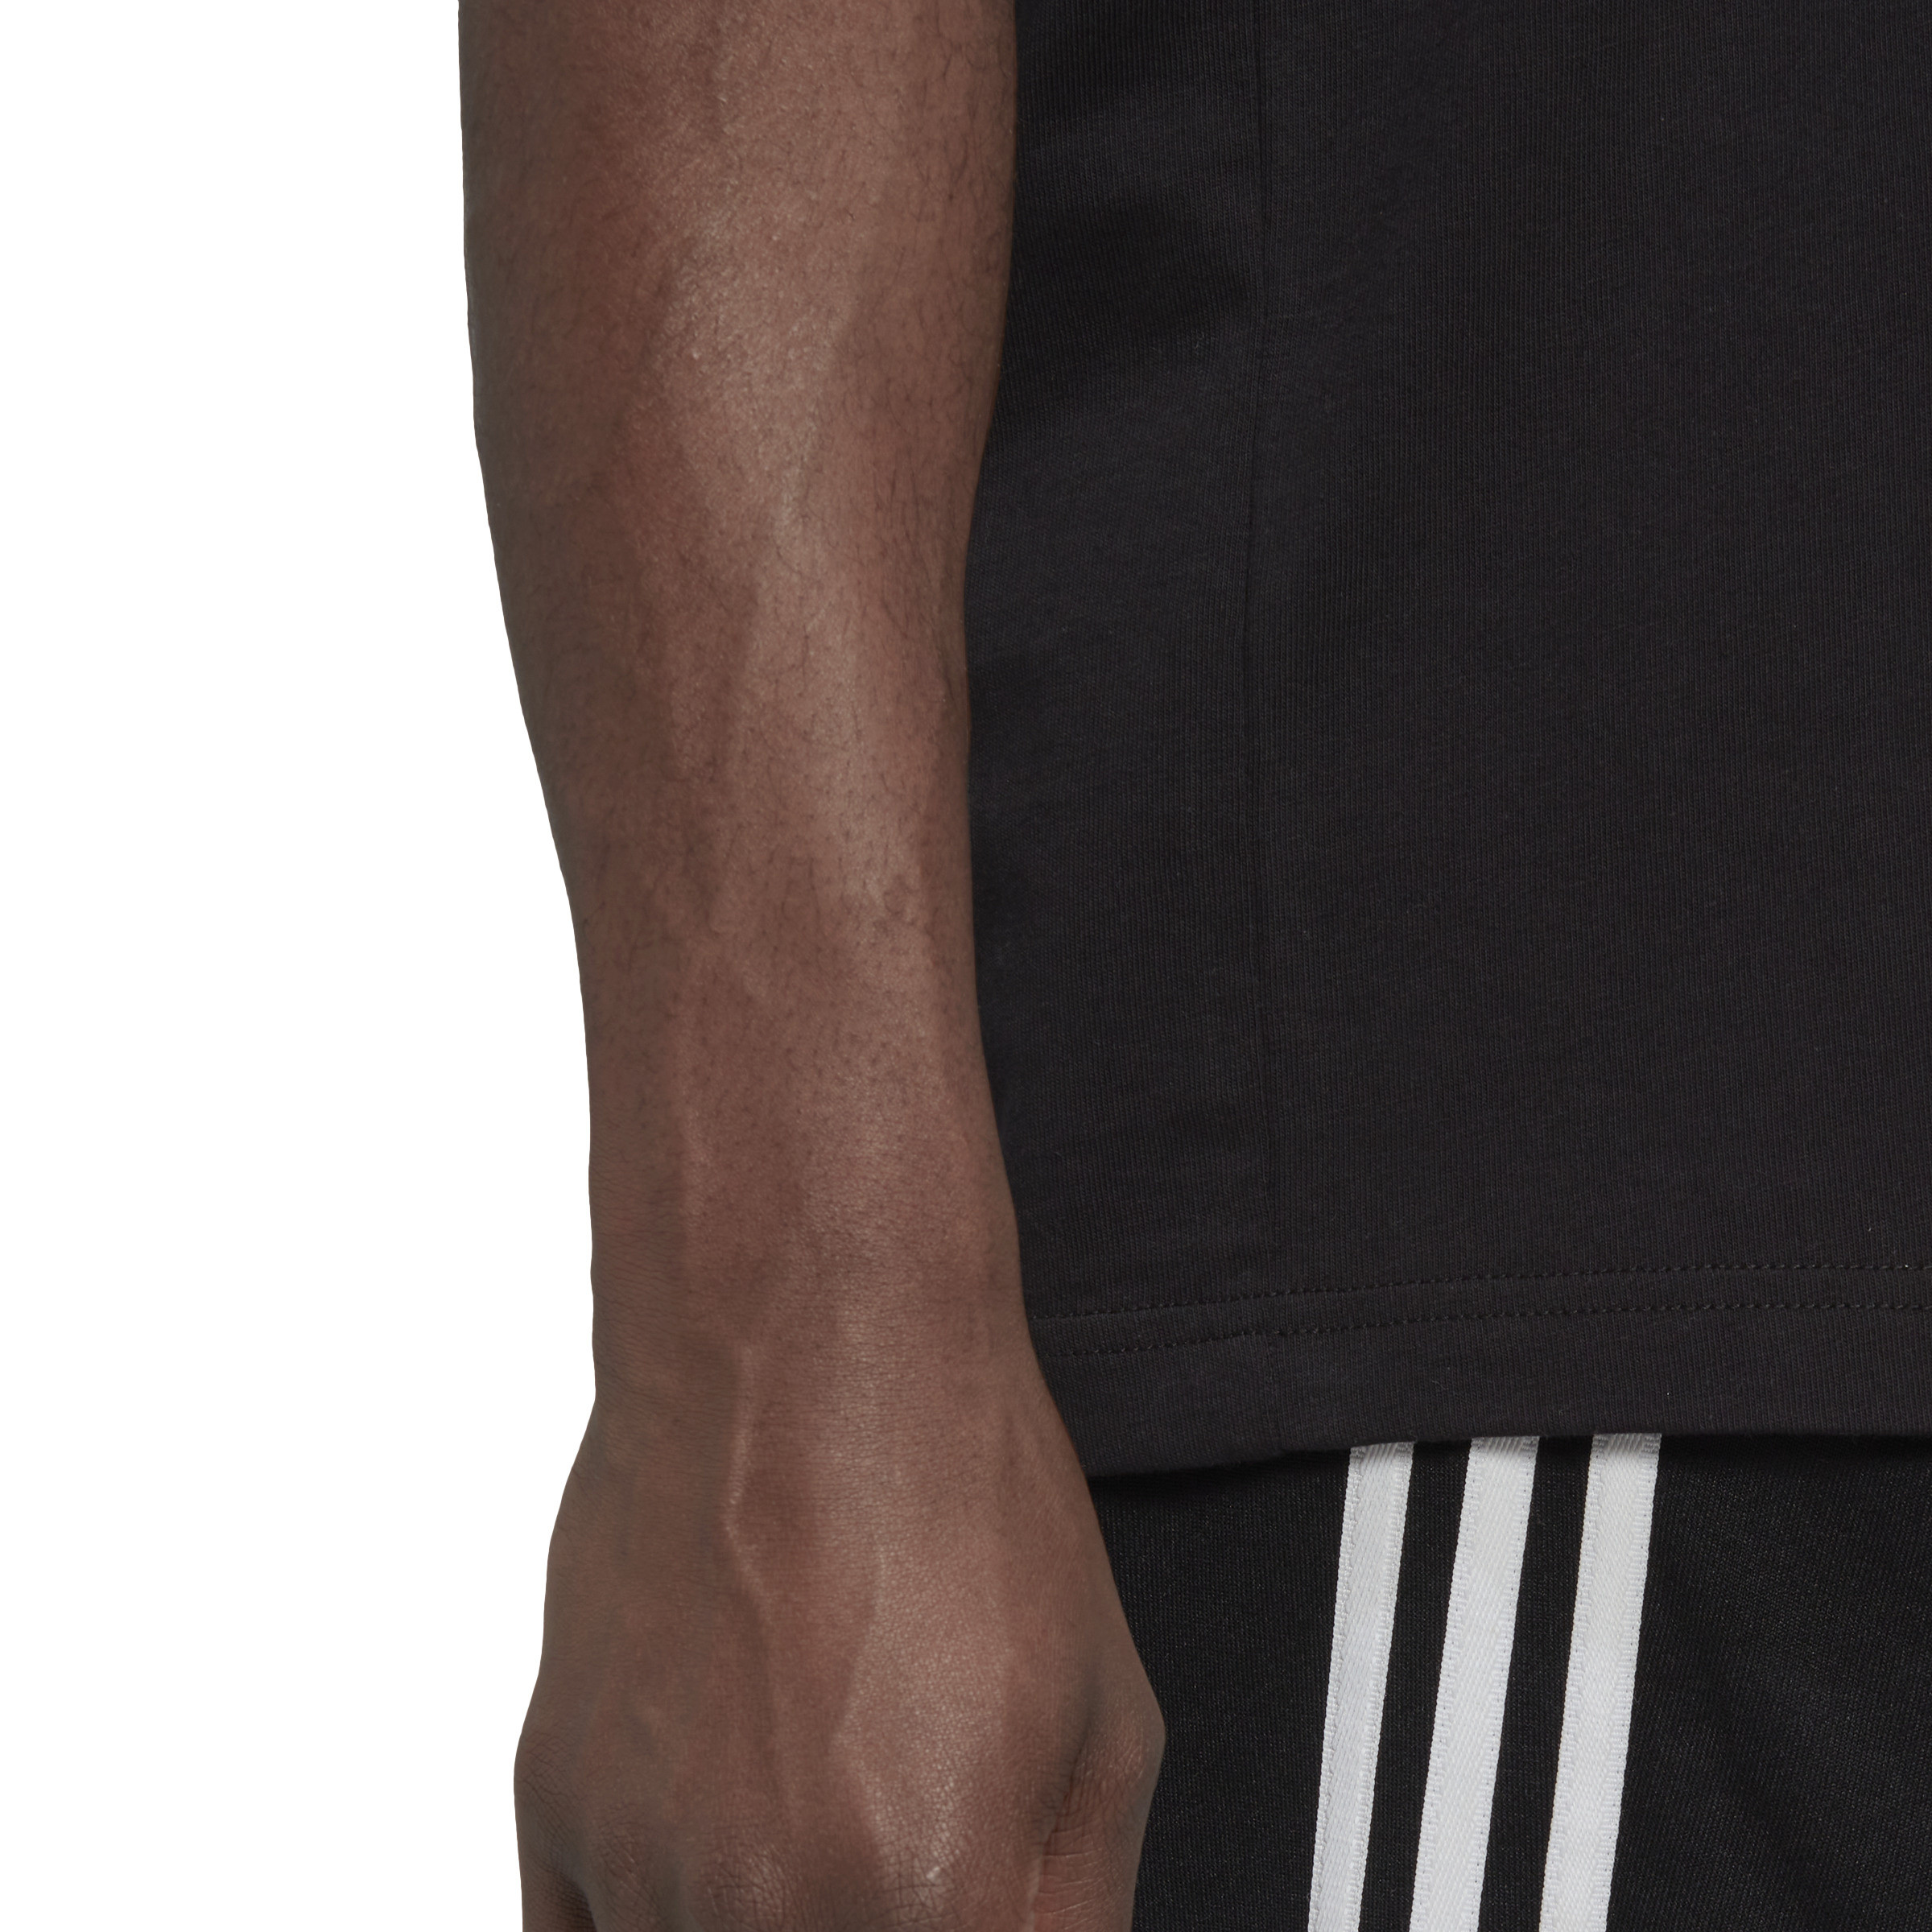 Adidas - Graphic Camo T-shirt, Black, large image number 3